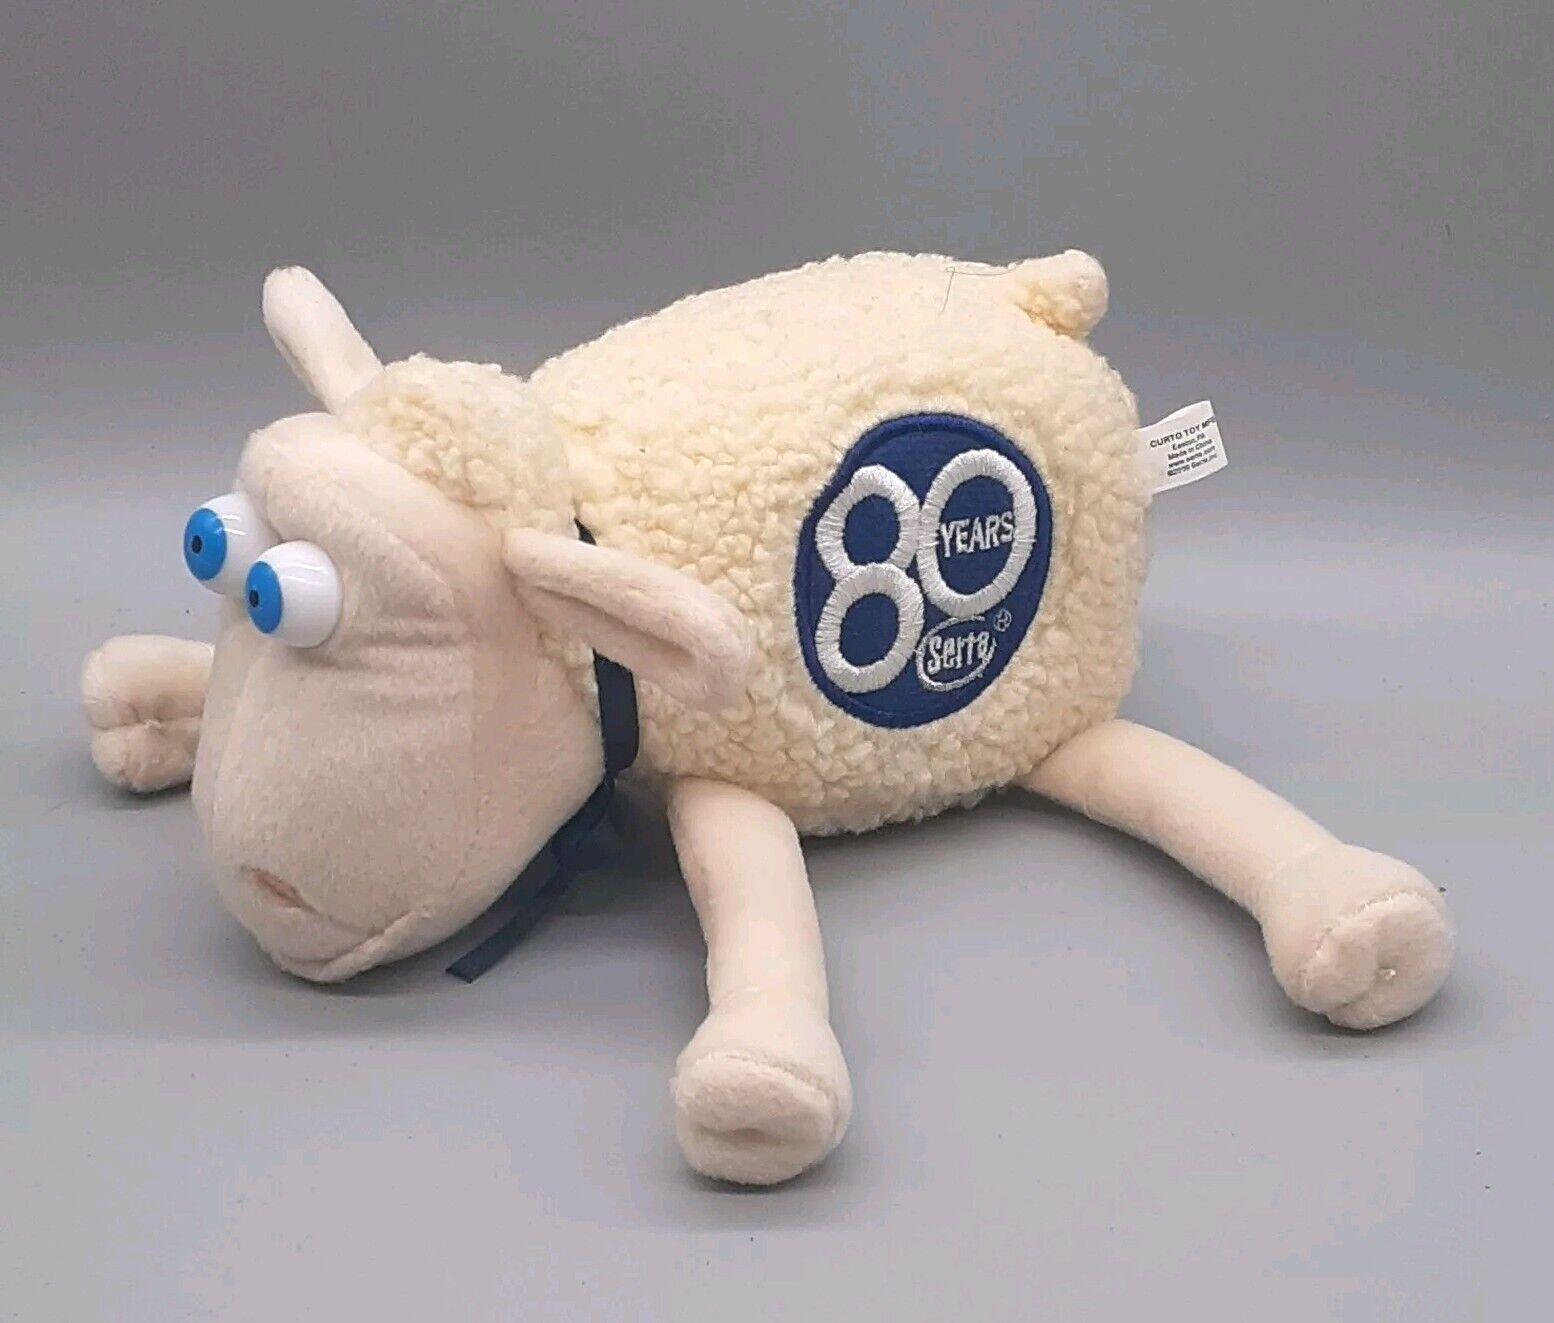 Serta 80 Year Anniversary Mattress Counting Sheep  Stuffed Animal Plush